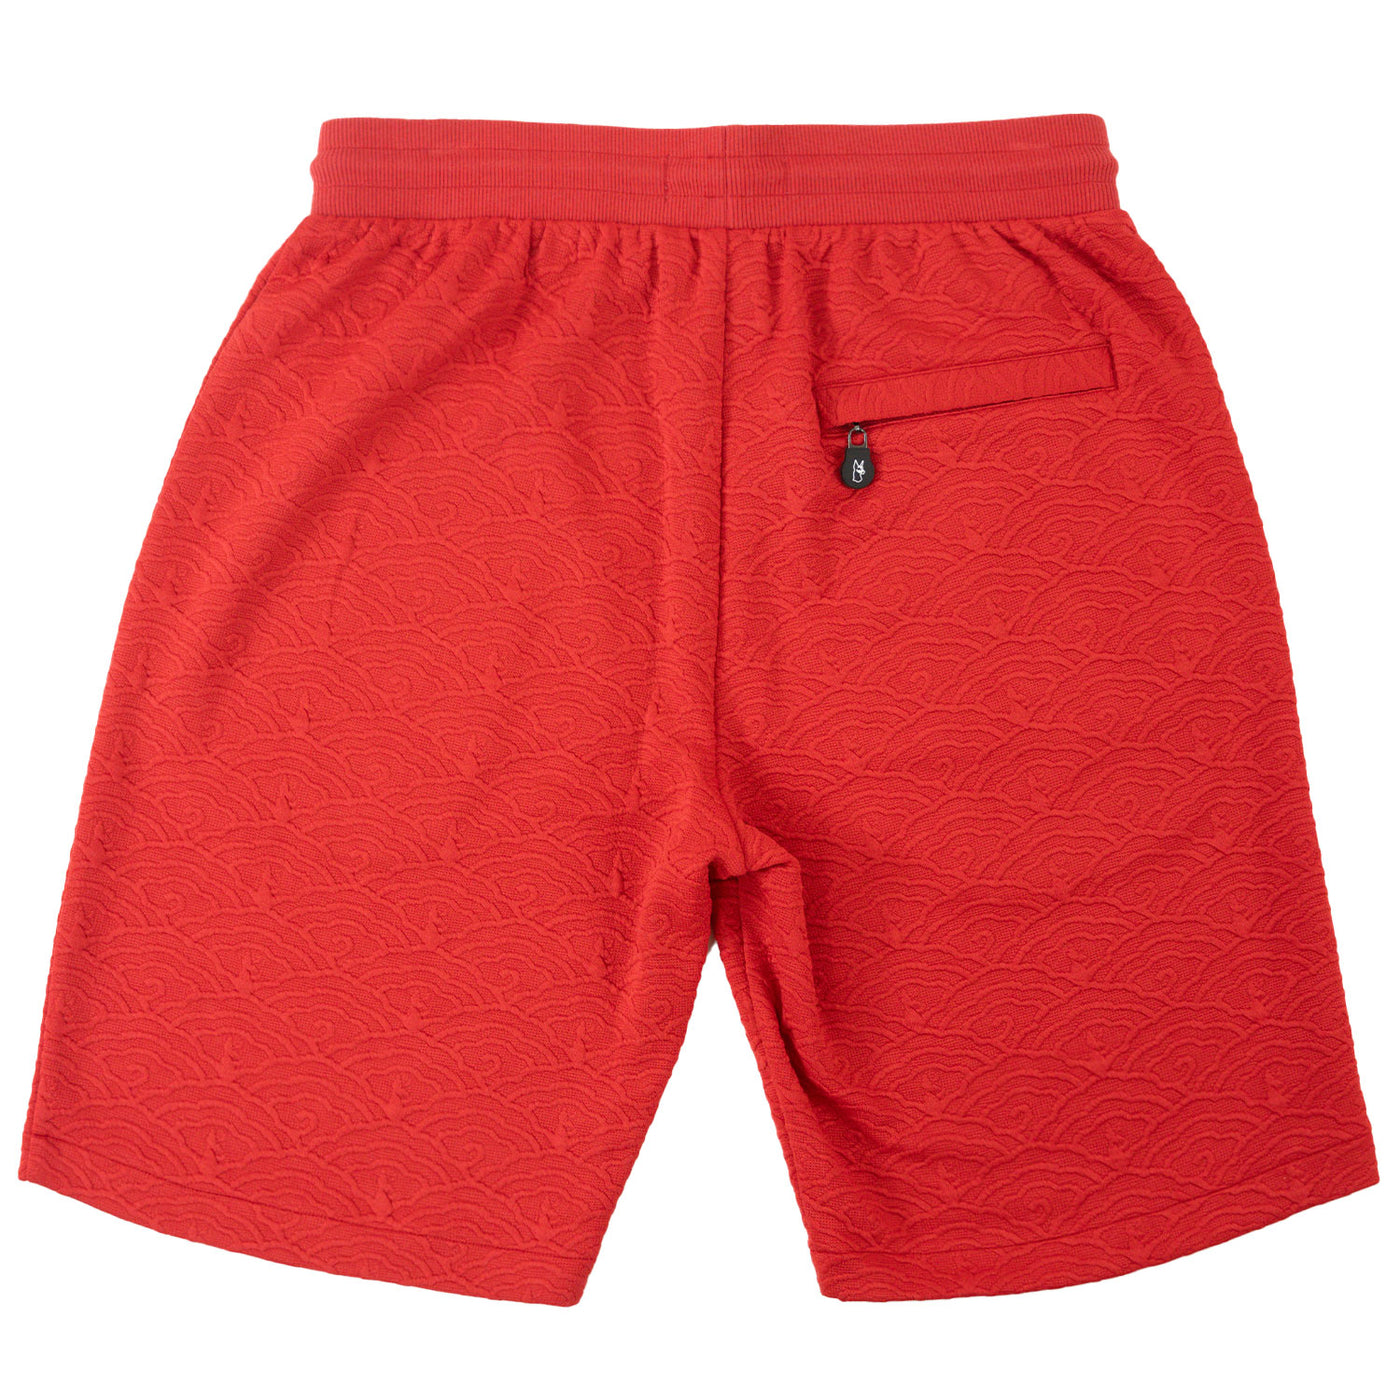 M654 Bellagio Shorts - Red